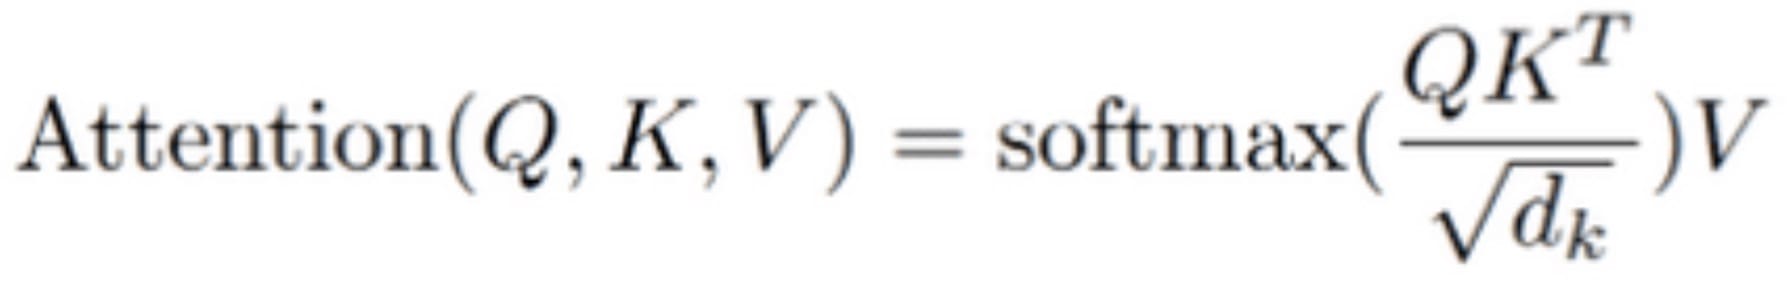 Math equation